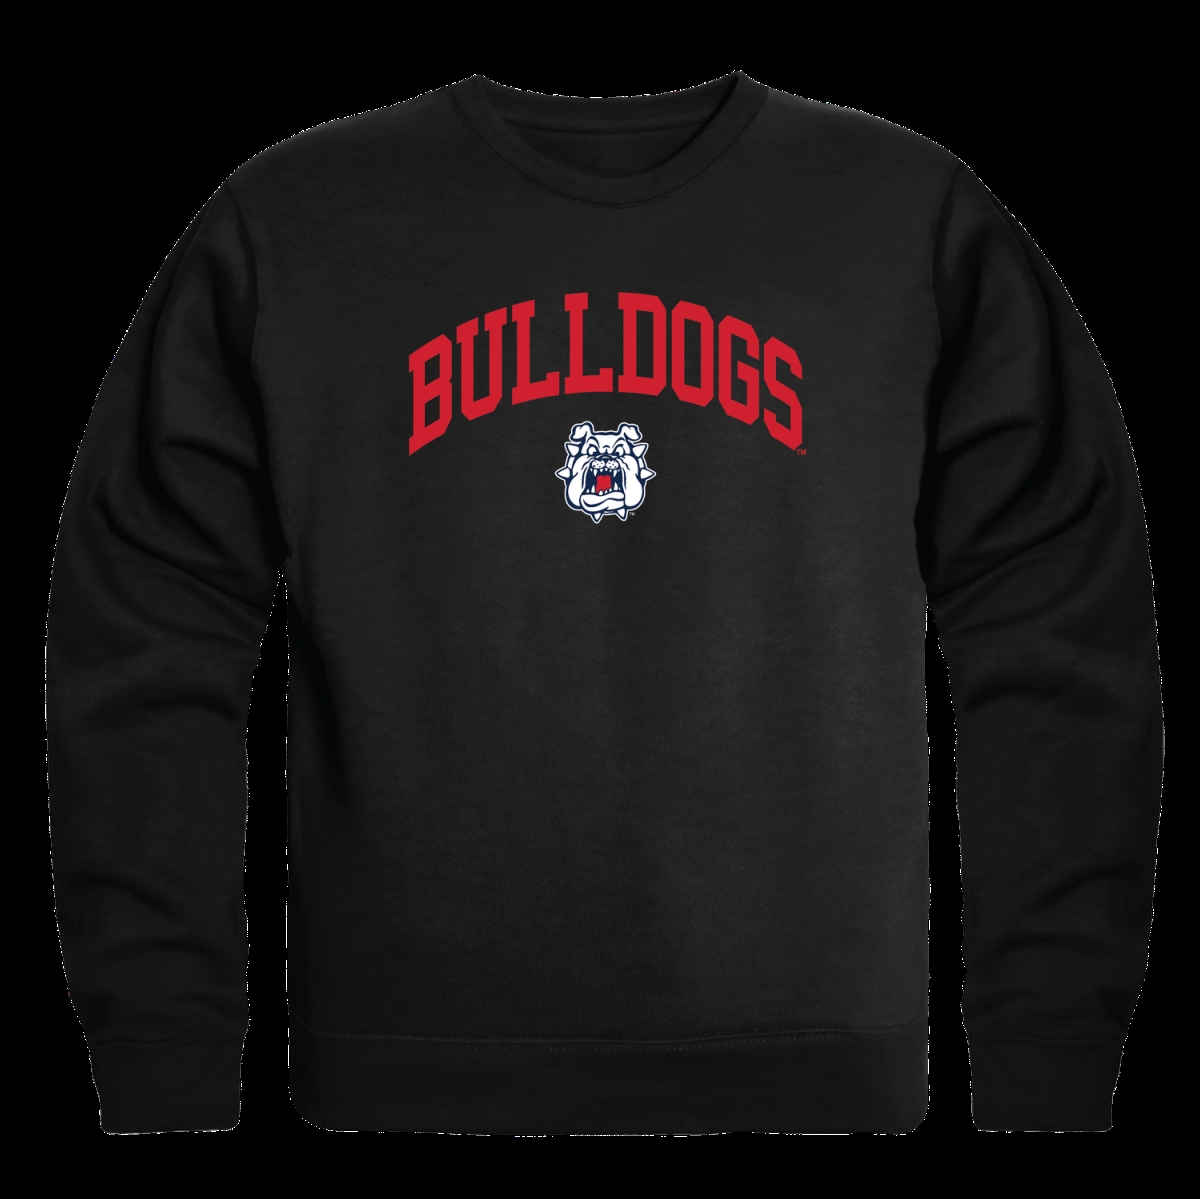 541-169-BK2-02 California State University, Fresno Bulldogs Campus Crewneck Sweatshirt, Black - Medium -  W Republic